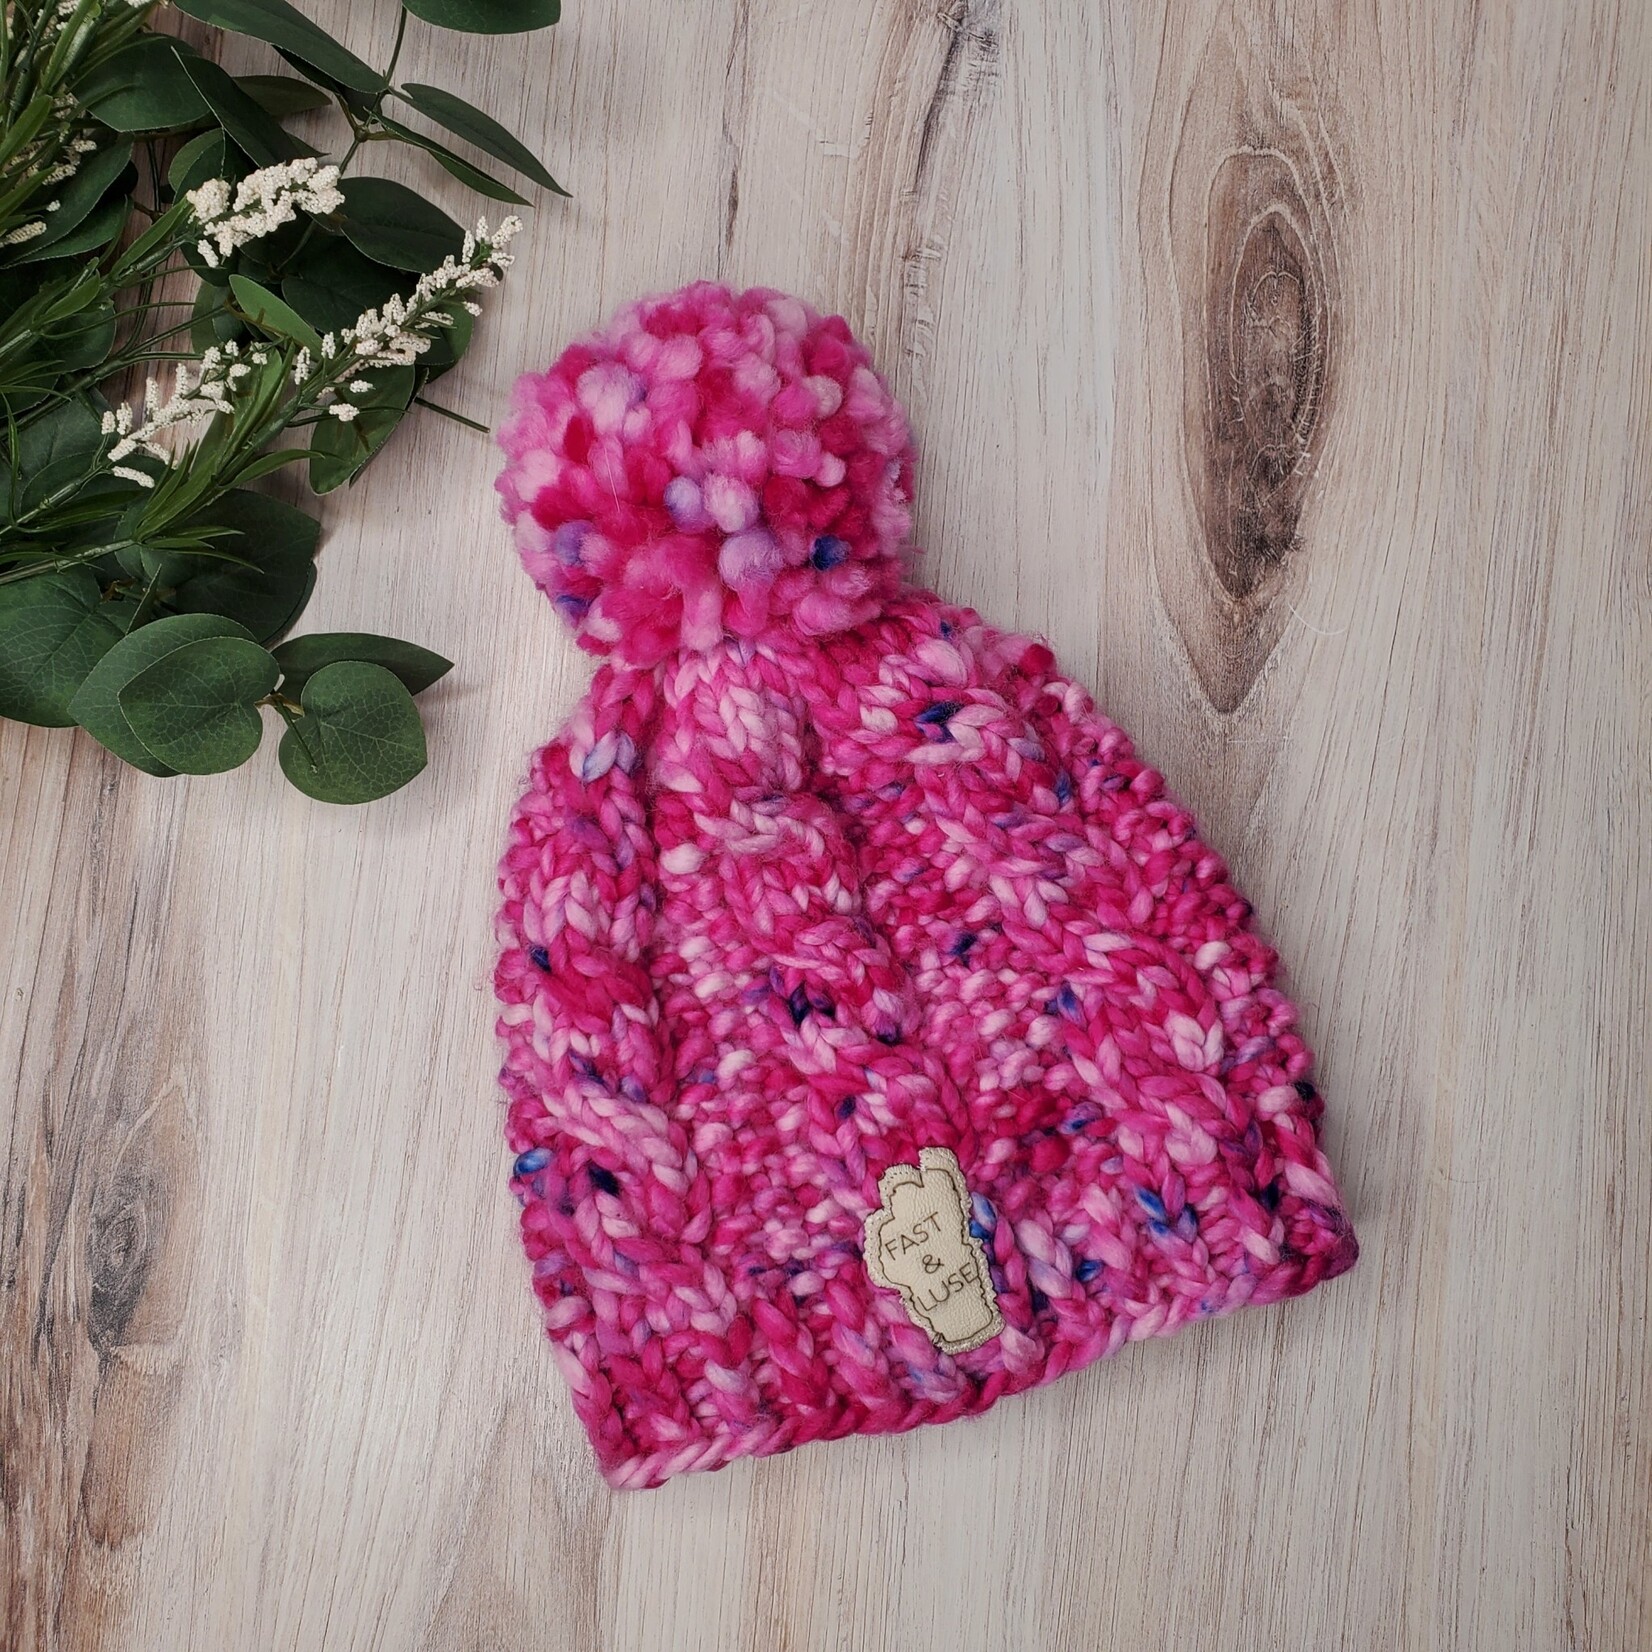 Fast and Luse Merino Wool Hat w/ Yarn Pom Pom - Hot Pink